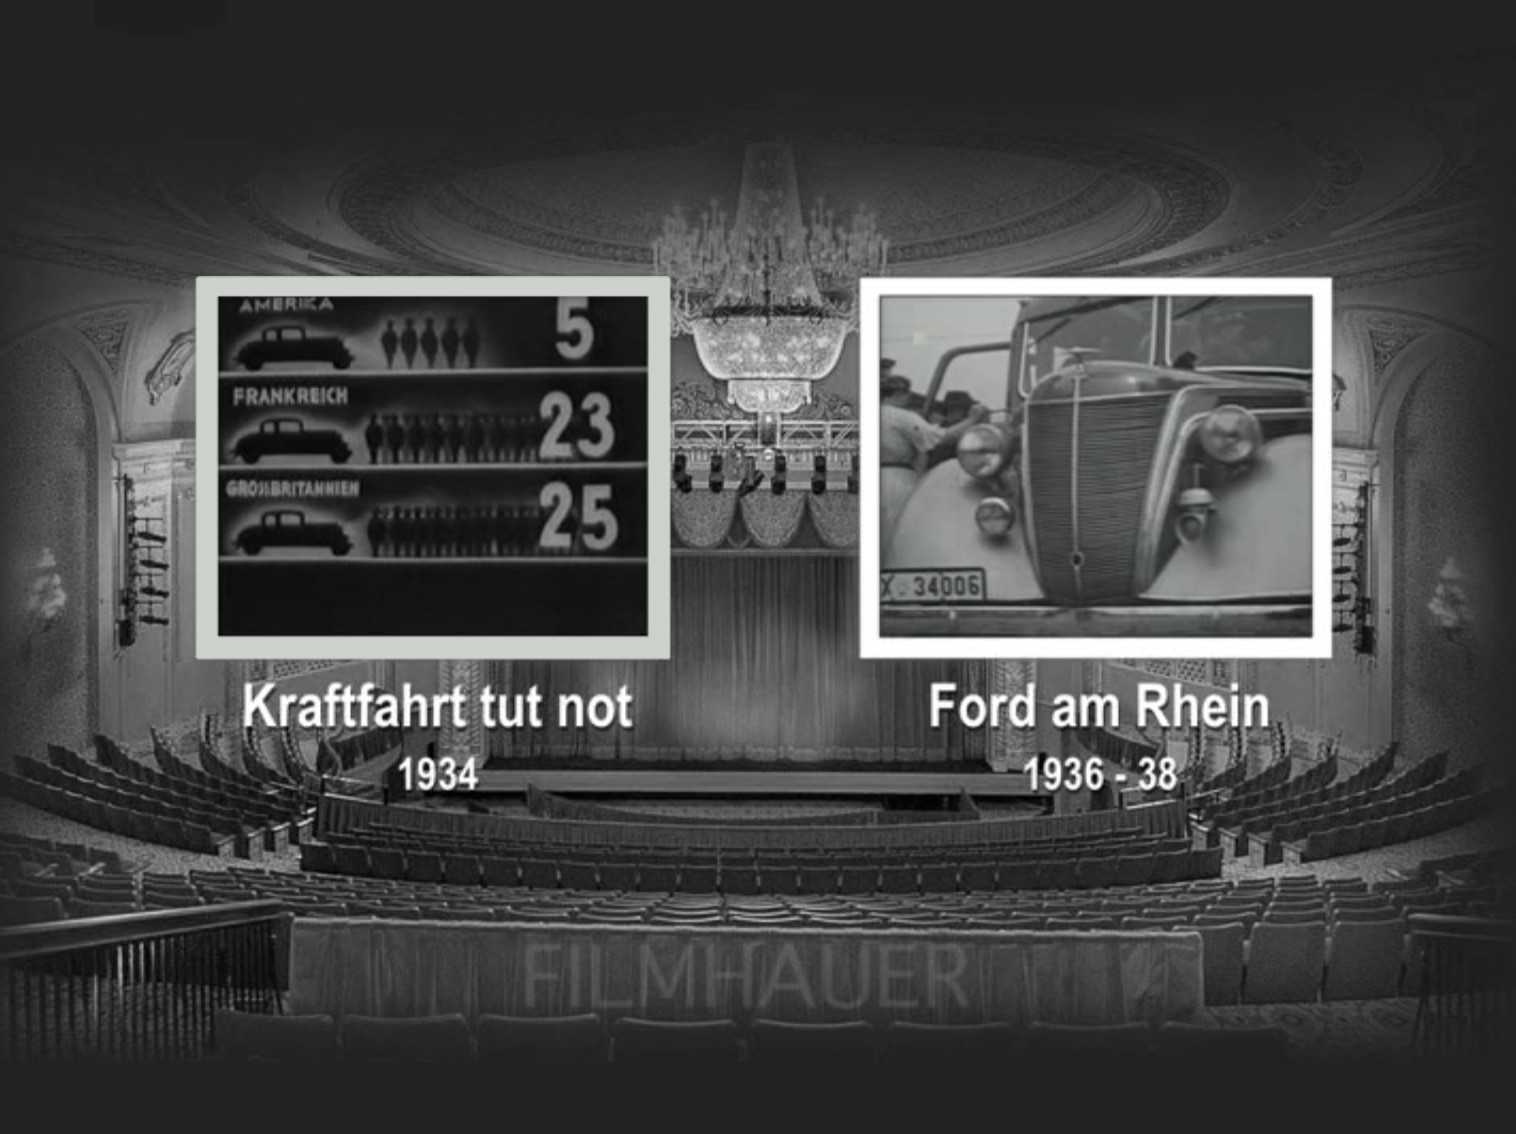 KRAFTFAHRT TUT NOT 1934 - FORD AM RHEIN 1936-38